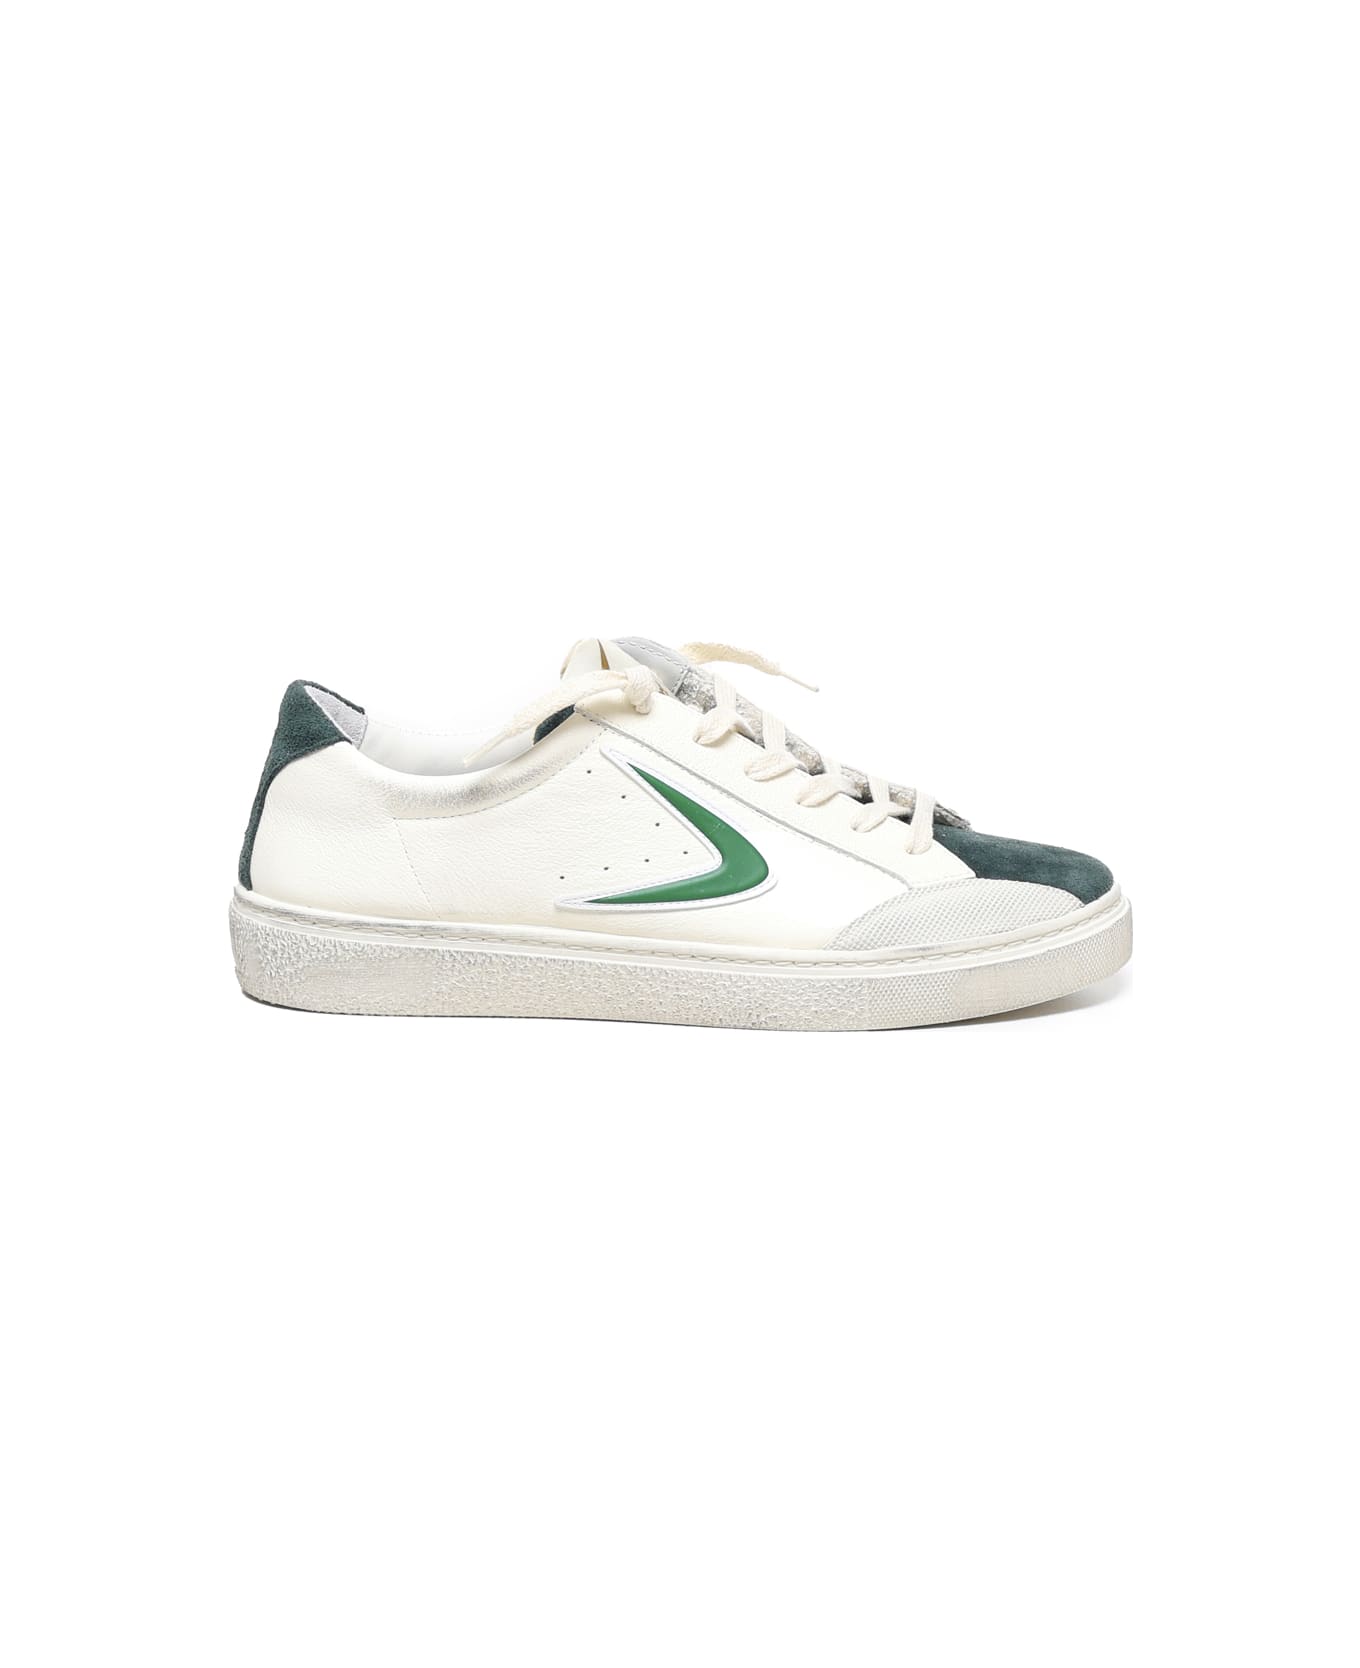 Valsport Ollie Goofy Sneakers - White, green